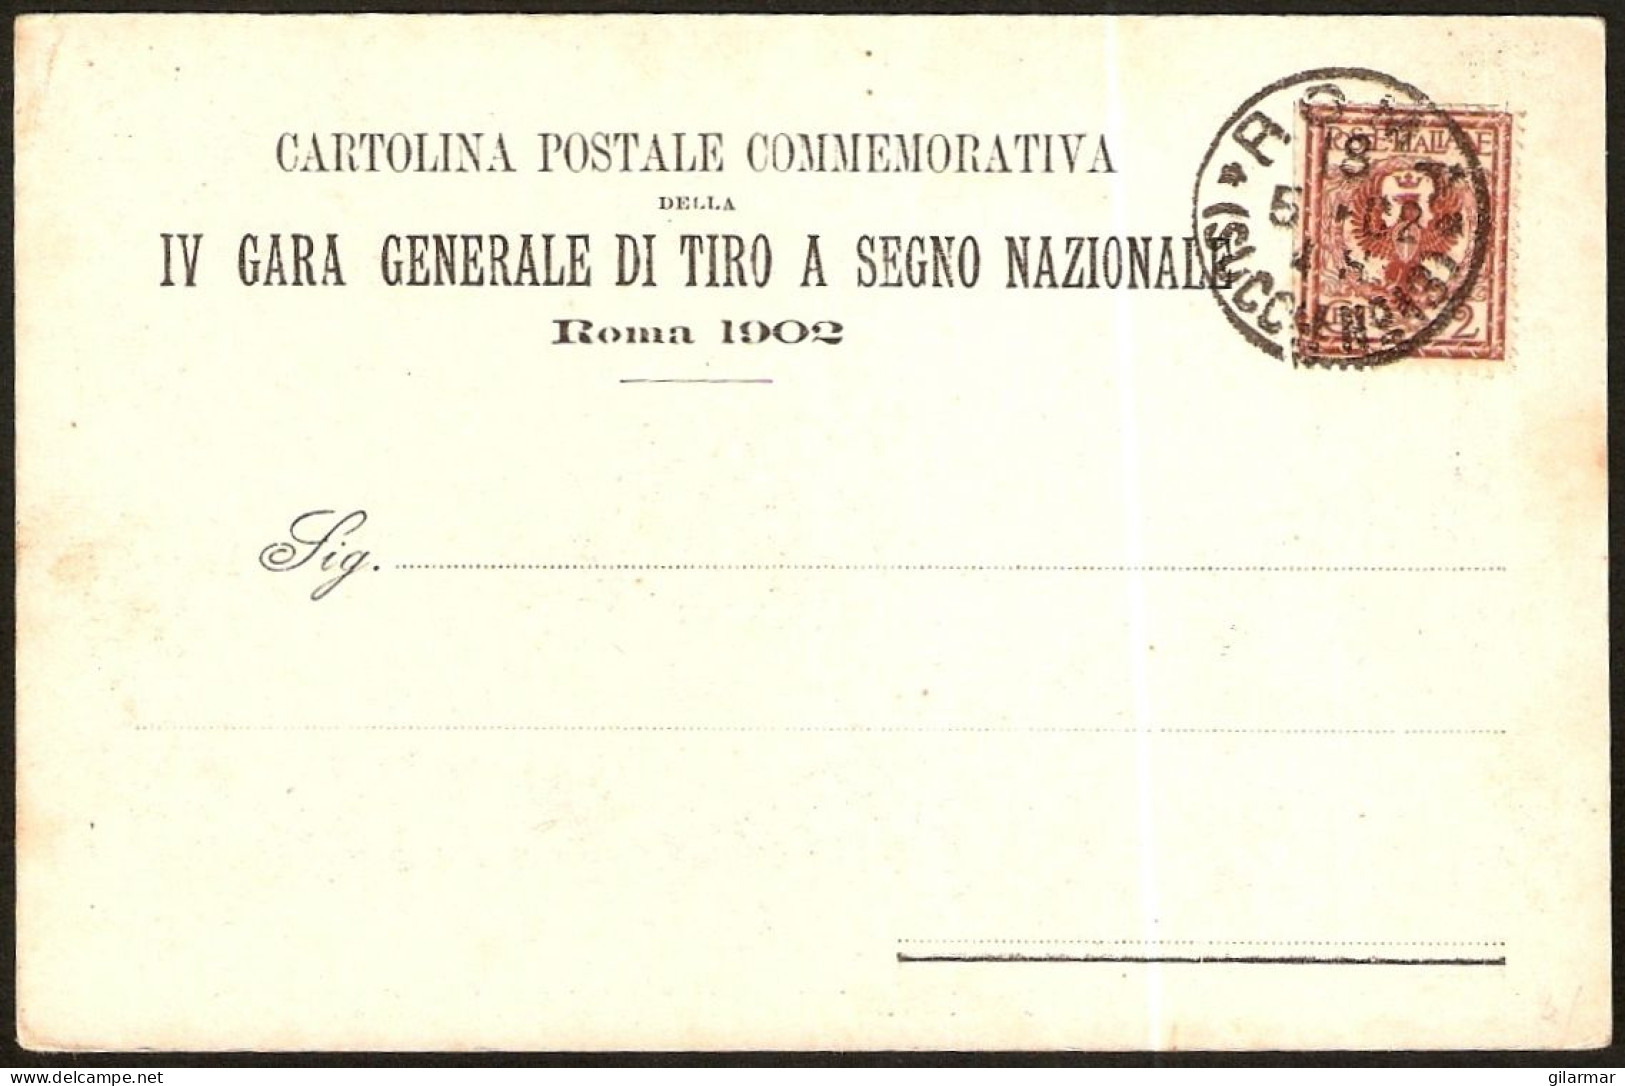 SHOOTING - ITALIA ROMA 1902 - IV GARA GENERALE TIRO A SEGNO NAZIONALE - CARTOLINA POSTALE COMMEMORATIVA - M - Shooting (Weapons)